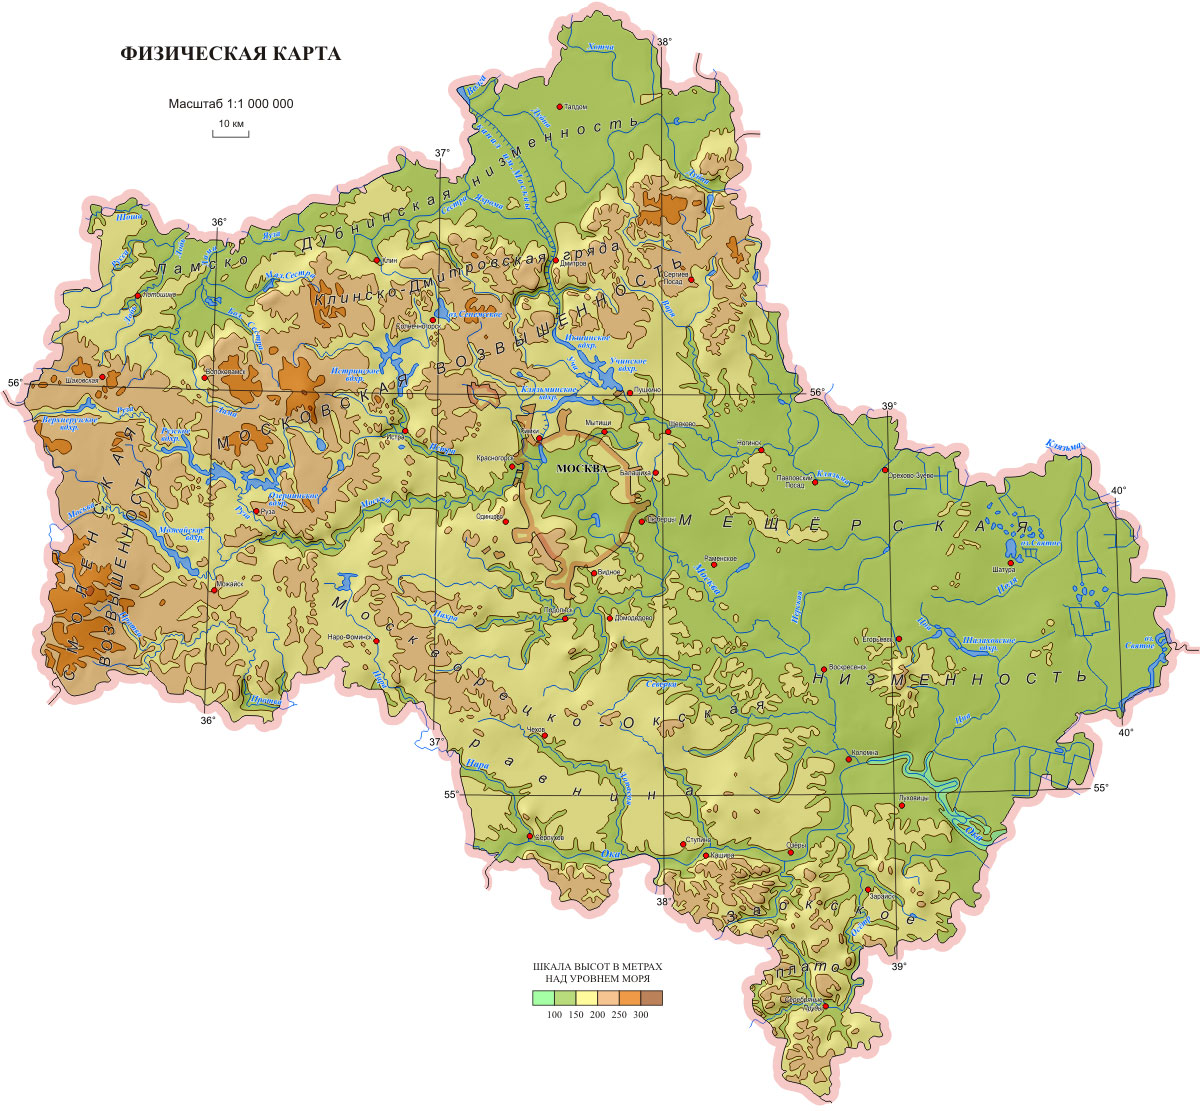 карта москвы и области